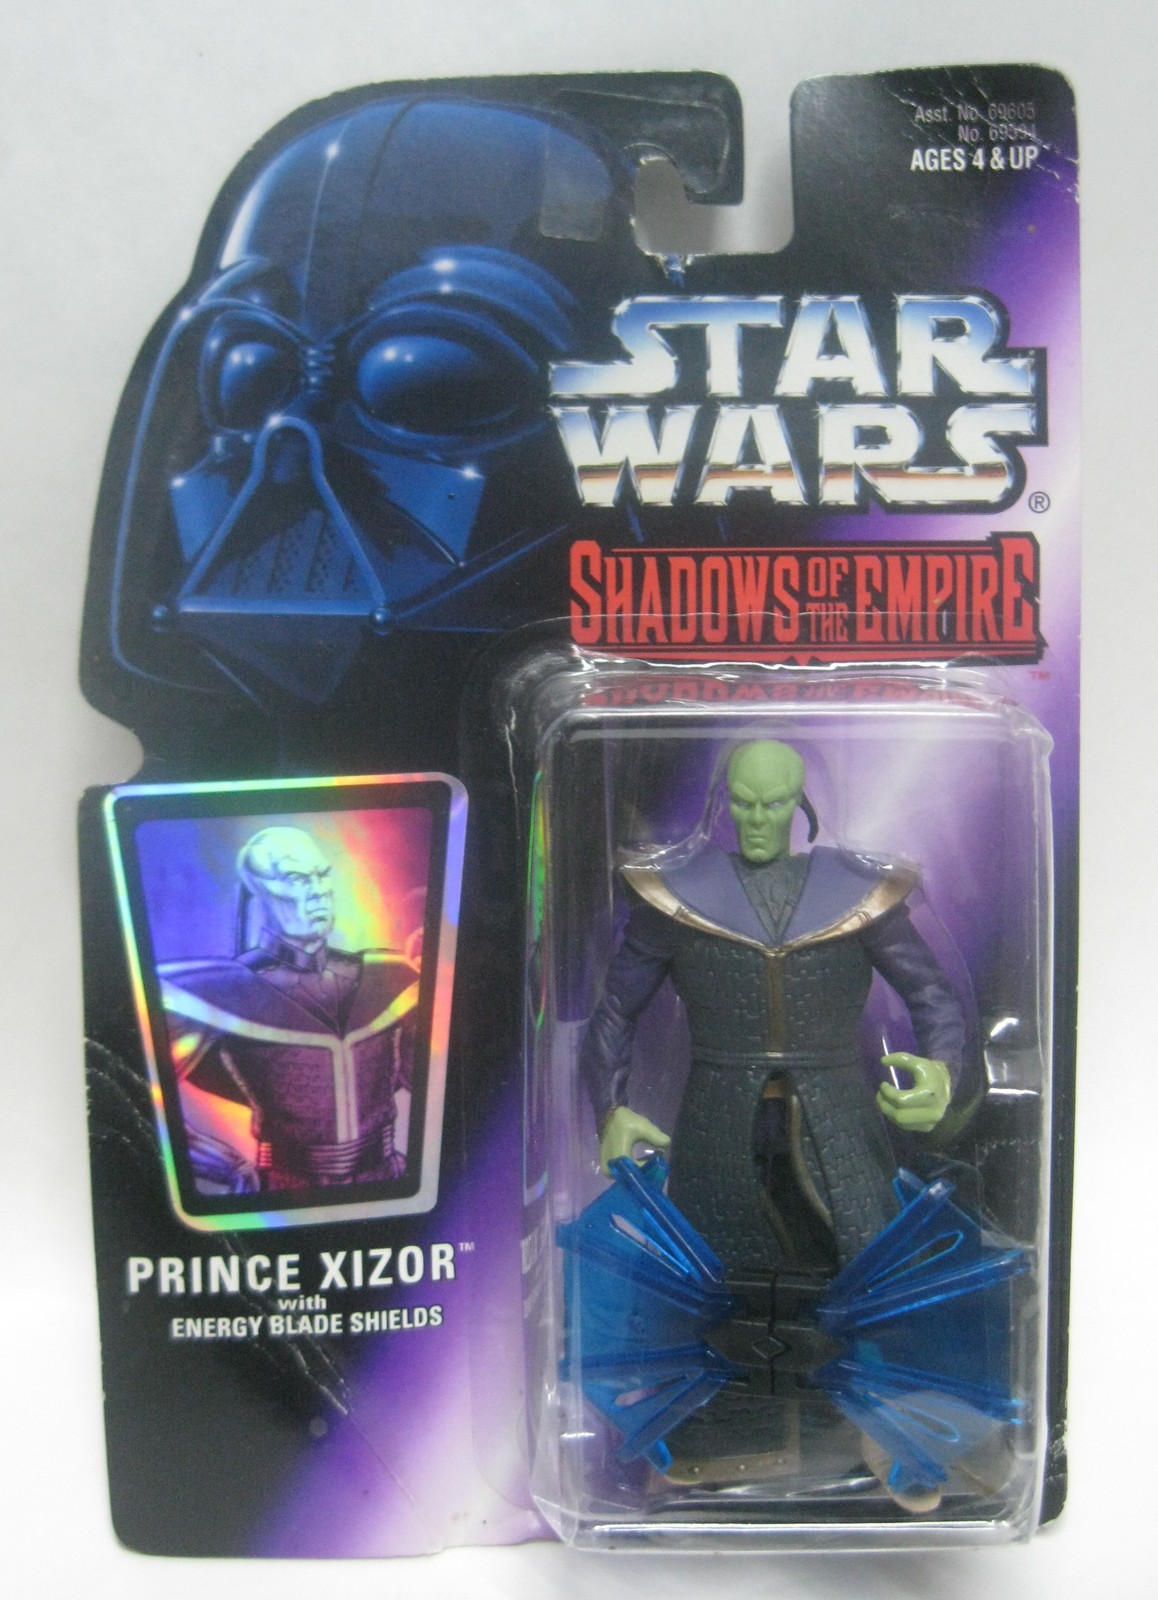 1996 Star Wars Shadows of the Empire, Prince Xizor with Energy Blade Shields NIP - $12.95